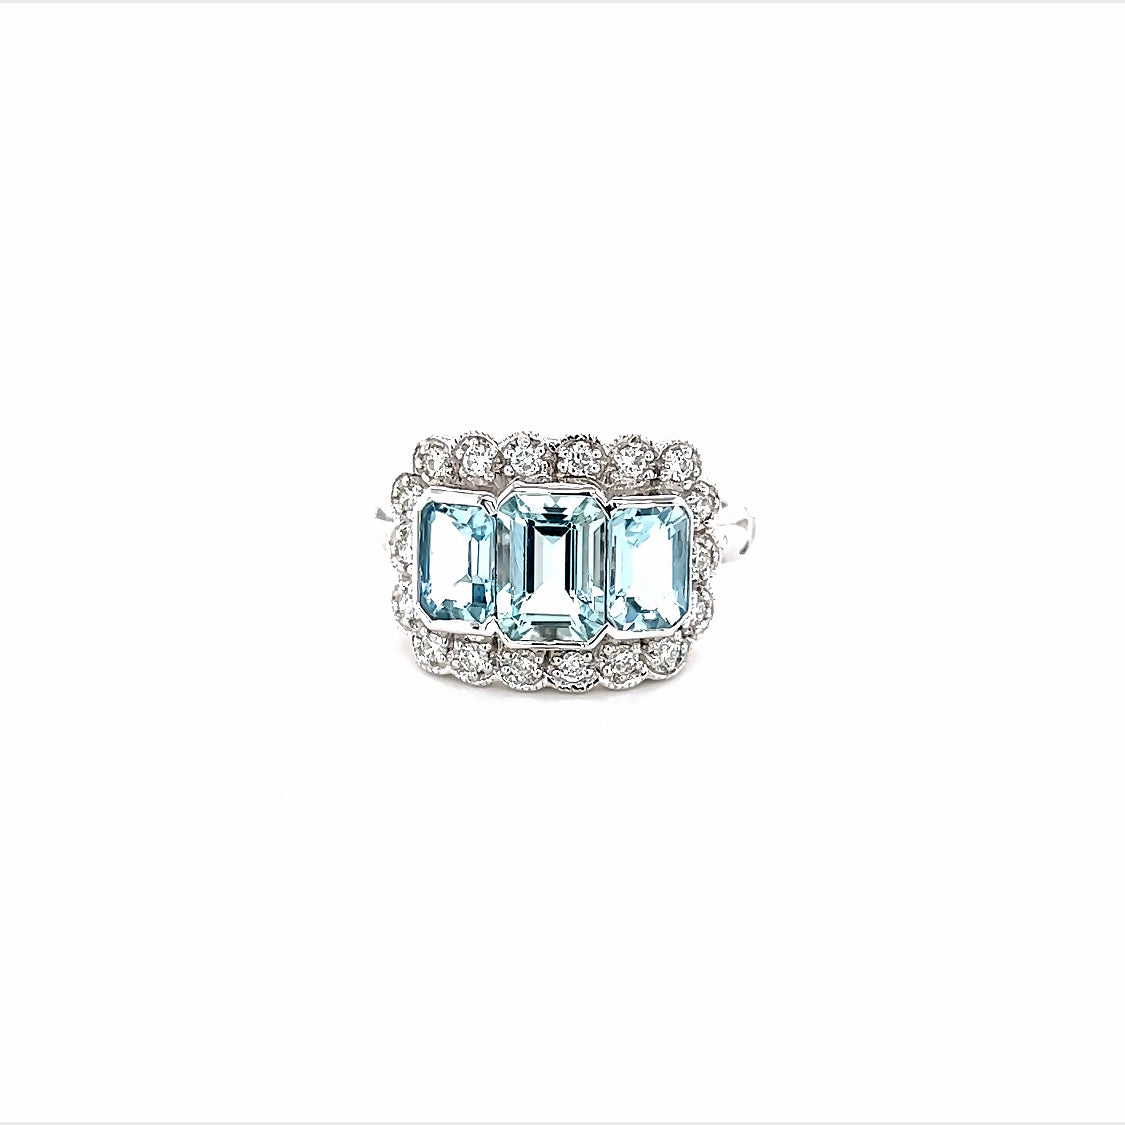 9ct 3 stone aquamarine ring surrounded by diamonds